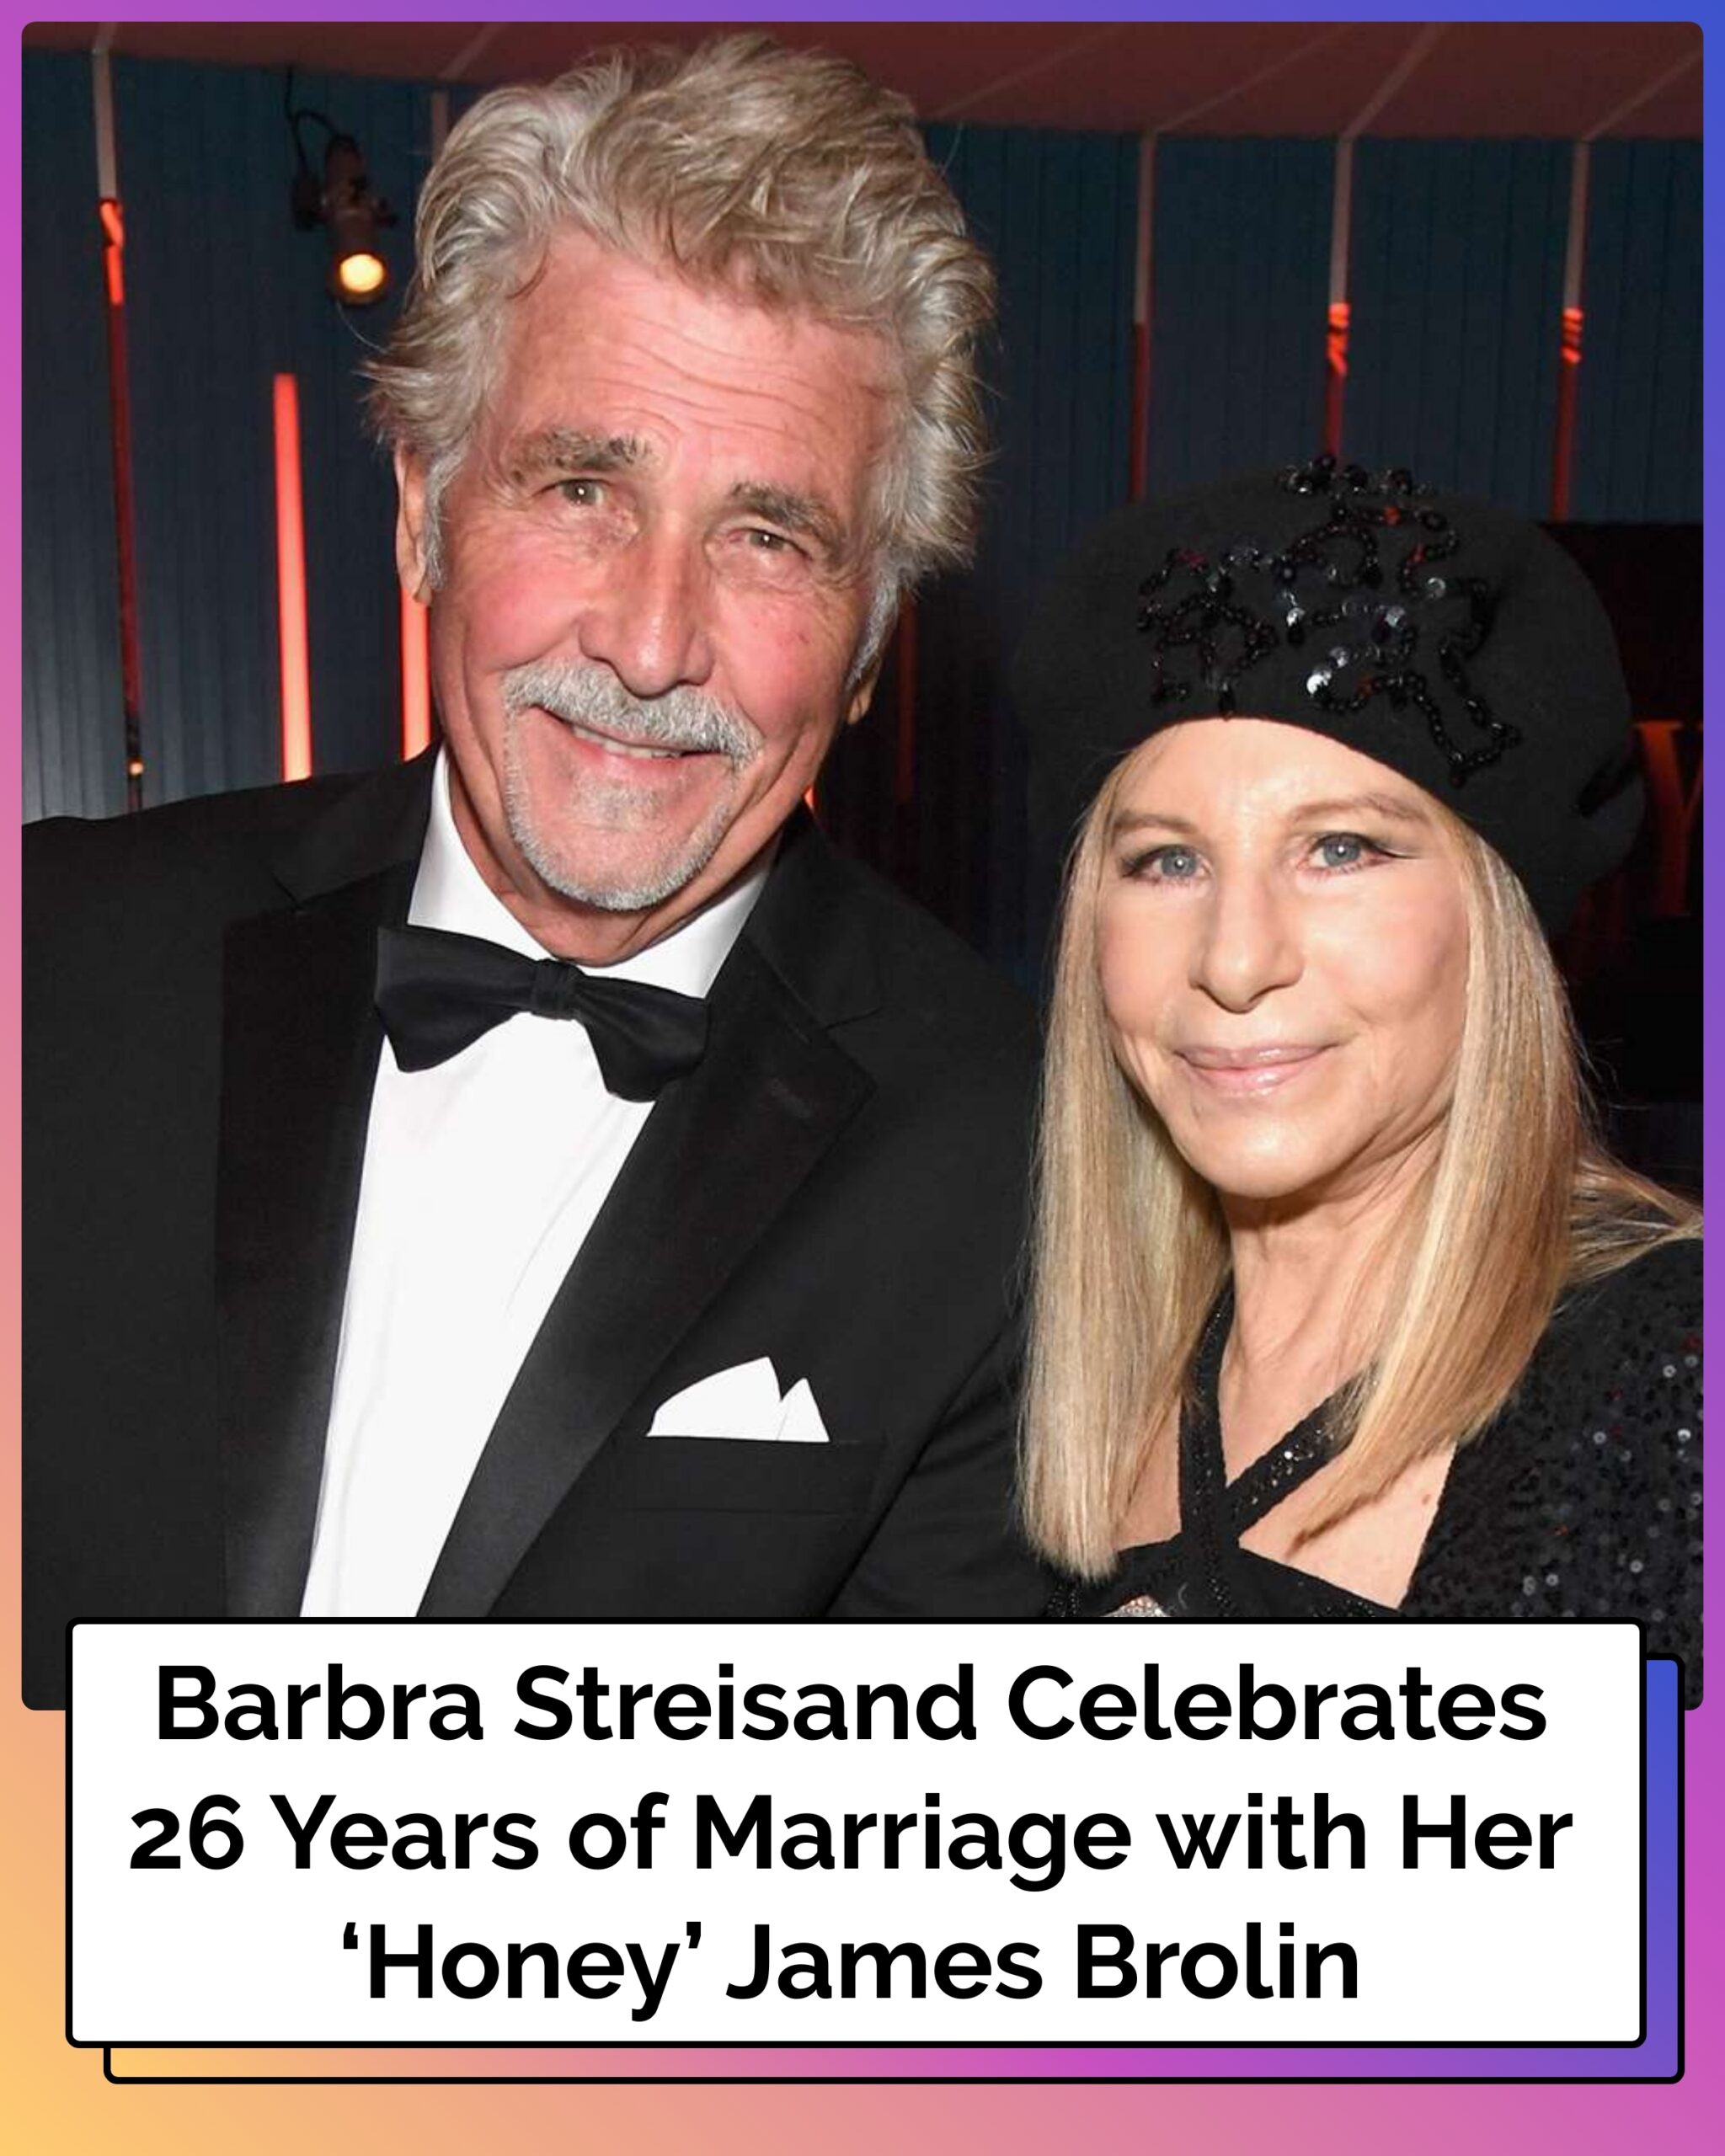 Barbra Streisand Celebrates 26 Years of Marriage with Her ‘Honey’ James Brolin